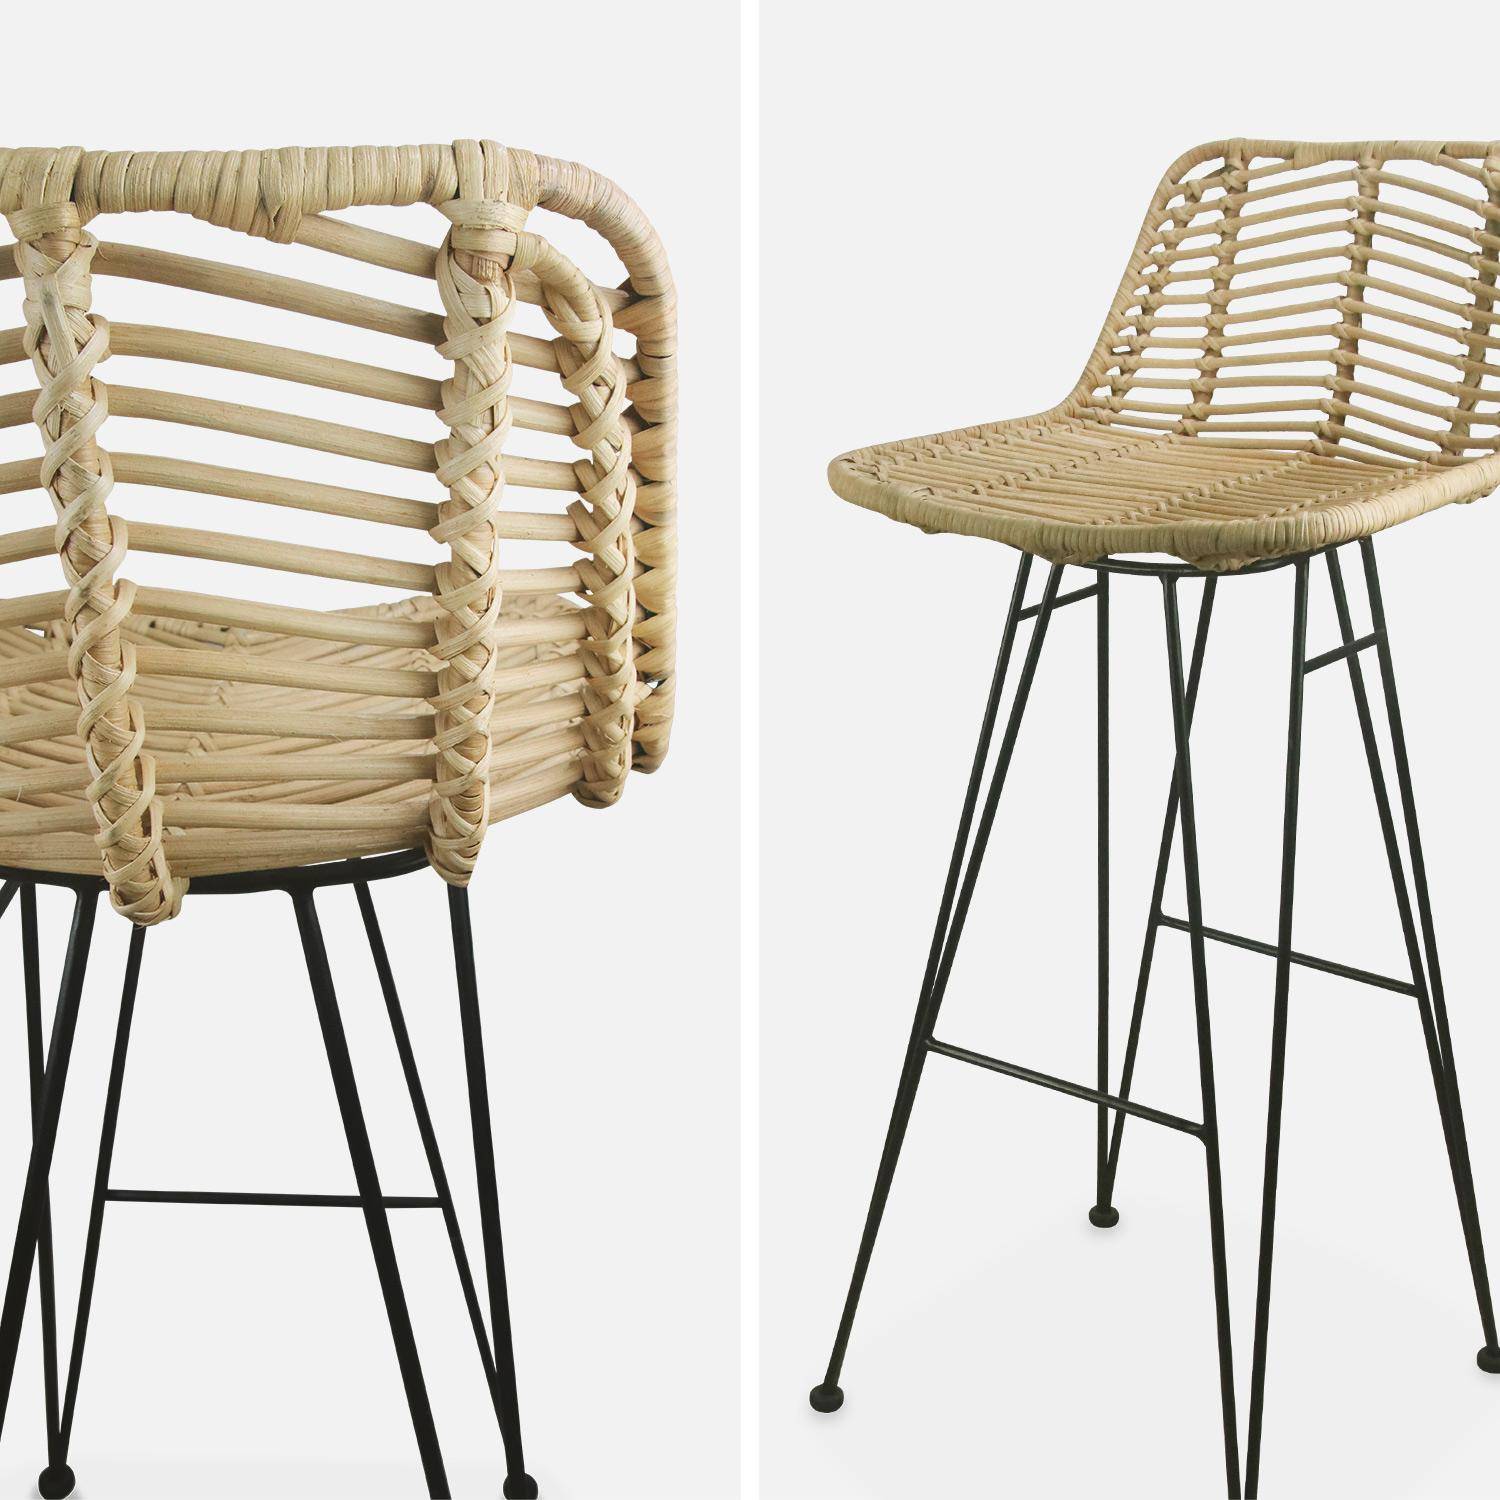 Pair of rattan bar stools, natural, L42.5xD48xH97cm, Cahya,sweeek,Photo9